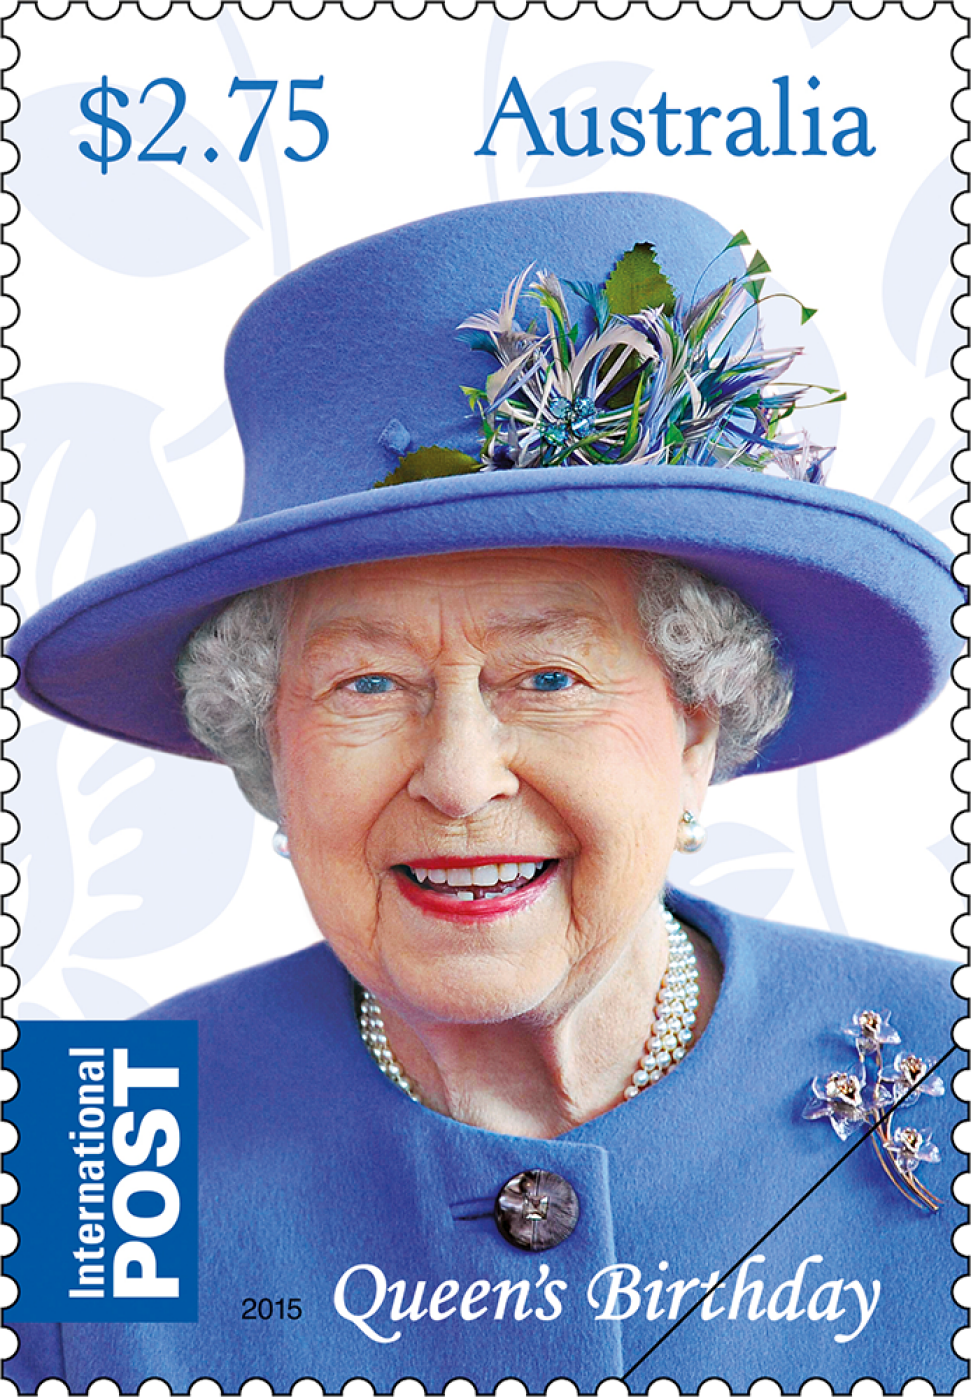 $2.75 Her Majesty Queen Elizabeth II, Windsor Castle, 2013 (international) stamp